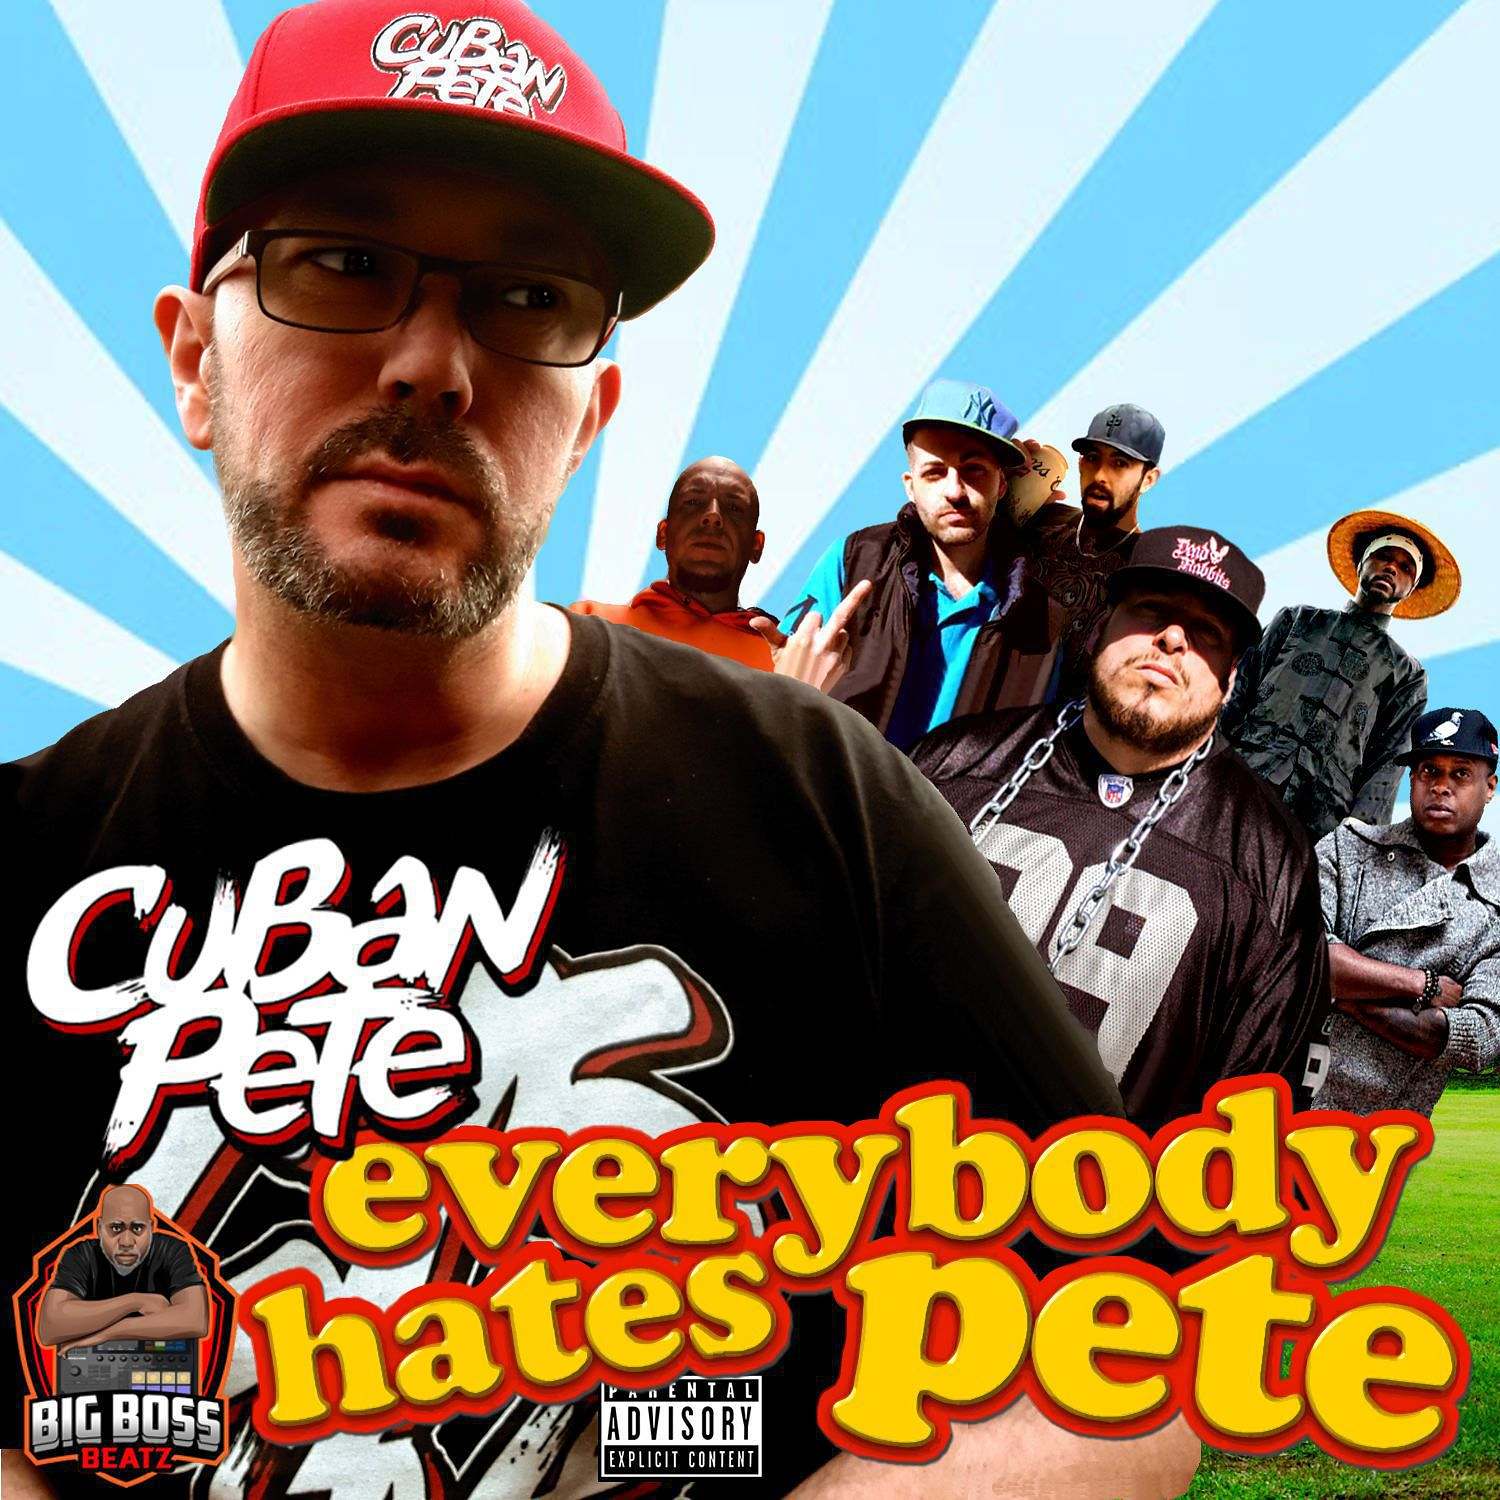 Stream Cuban Pete’s ‘Everybody Hates Pete’ Album